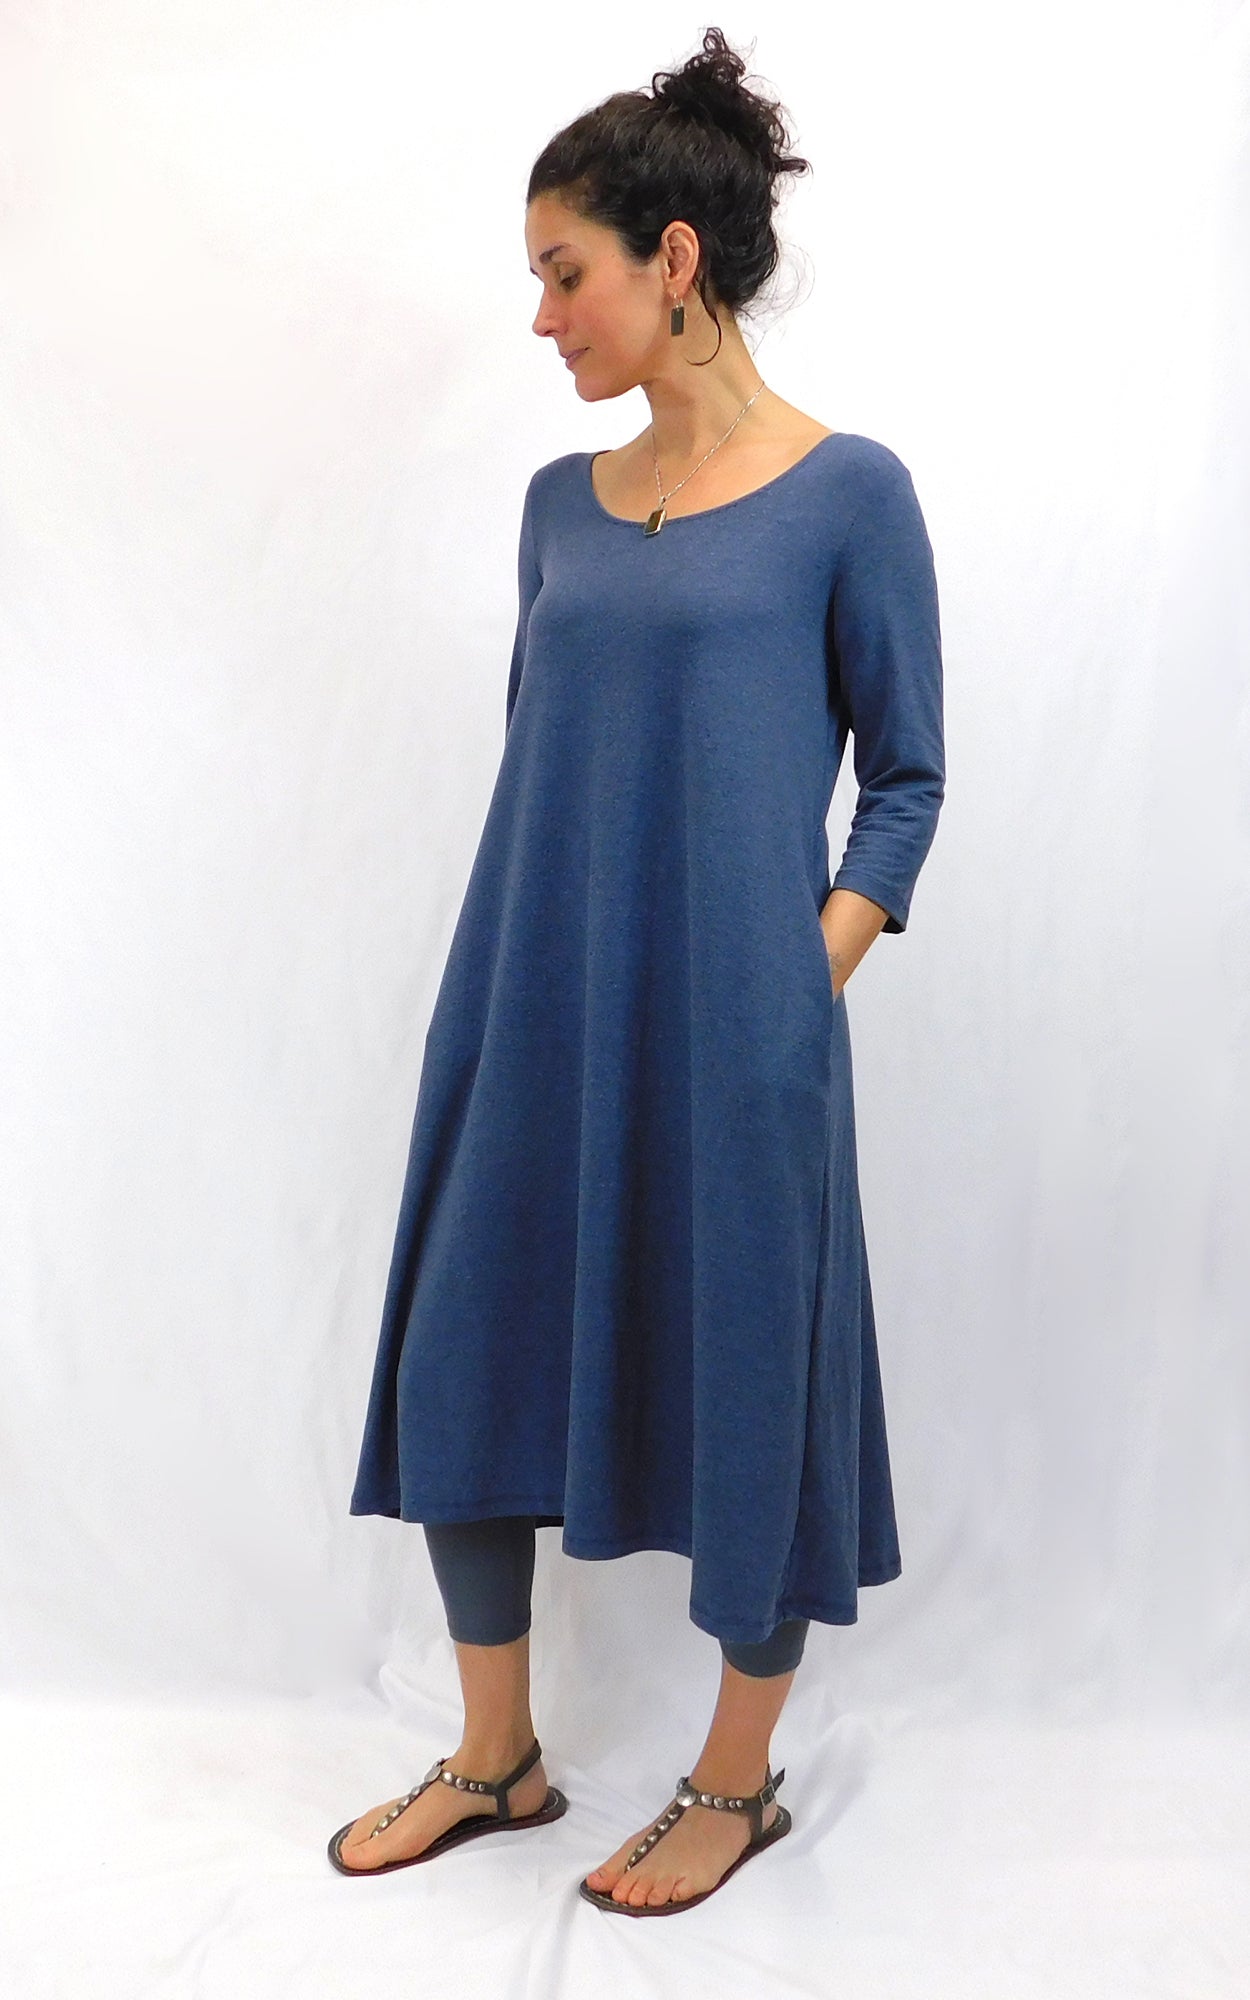 Bamboo Cotton 3/4 Sleeve Long Tunic Dress w Pockets - Heather Lake Blue